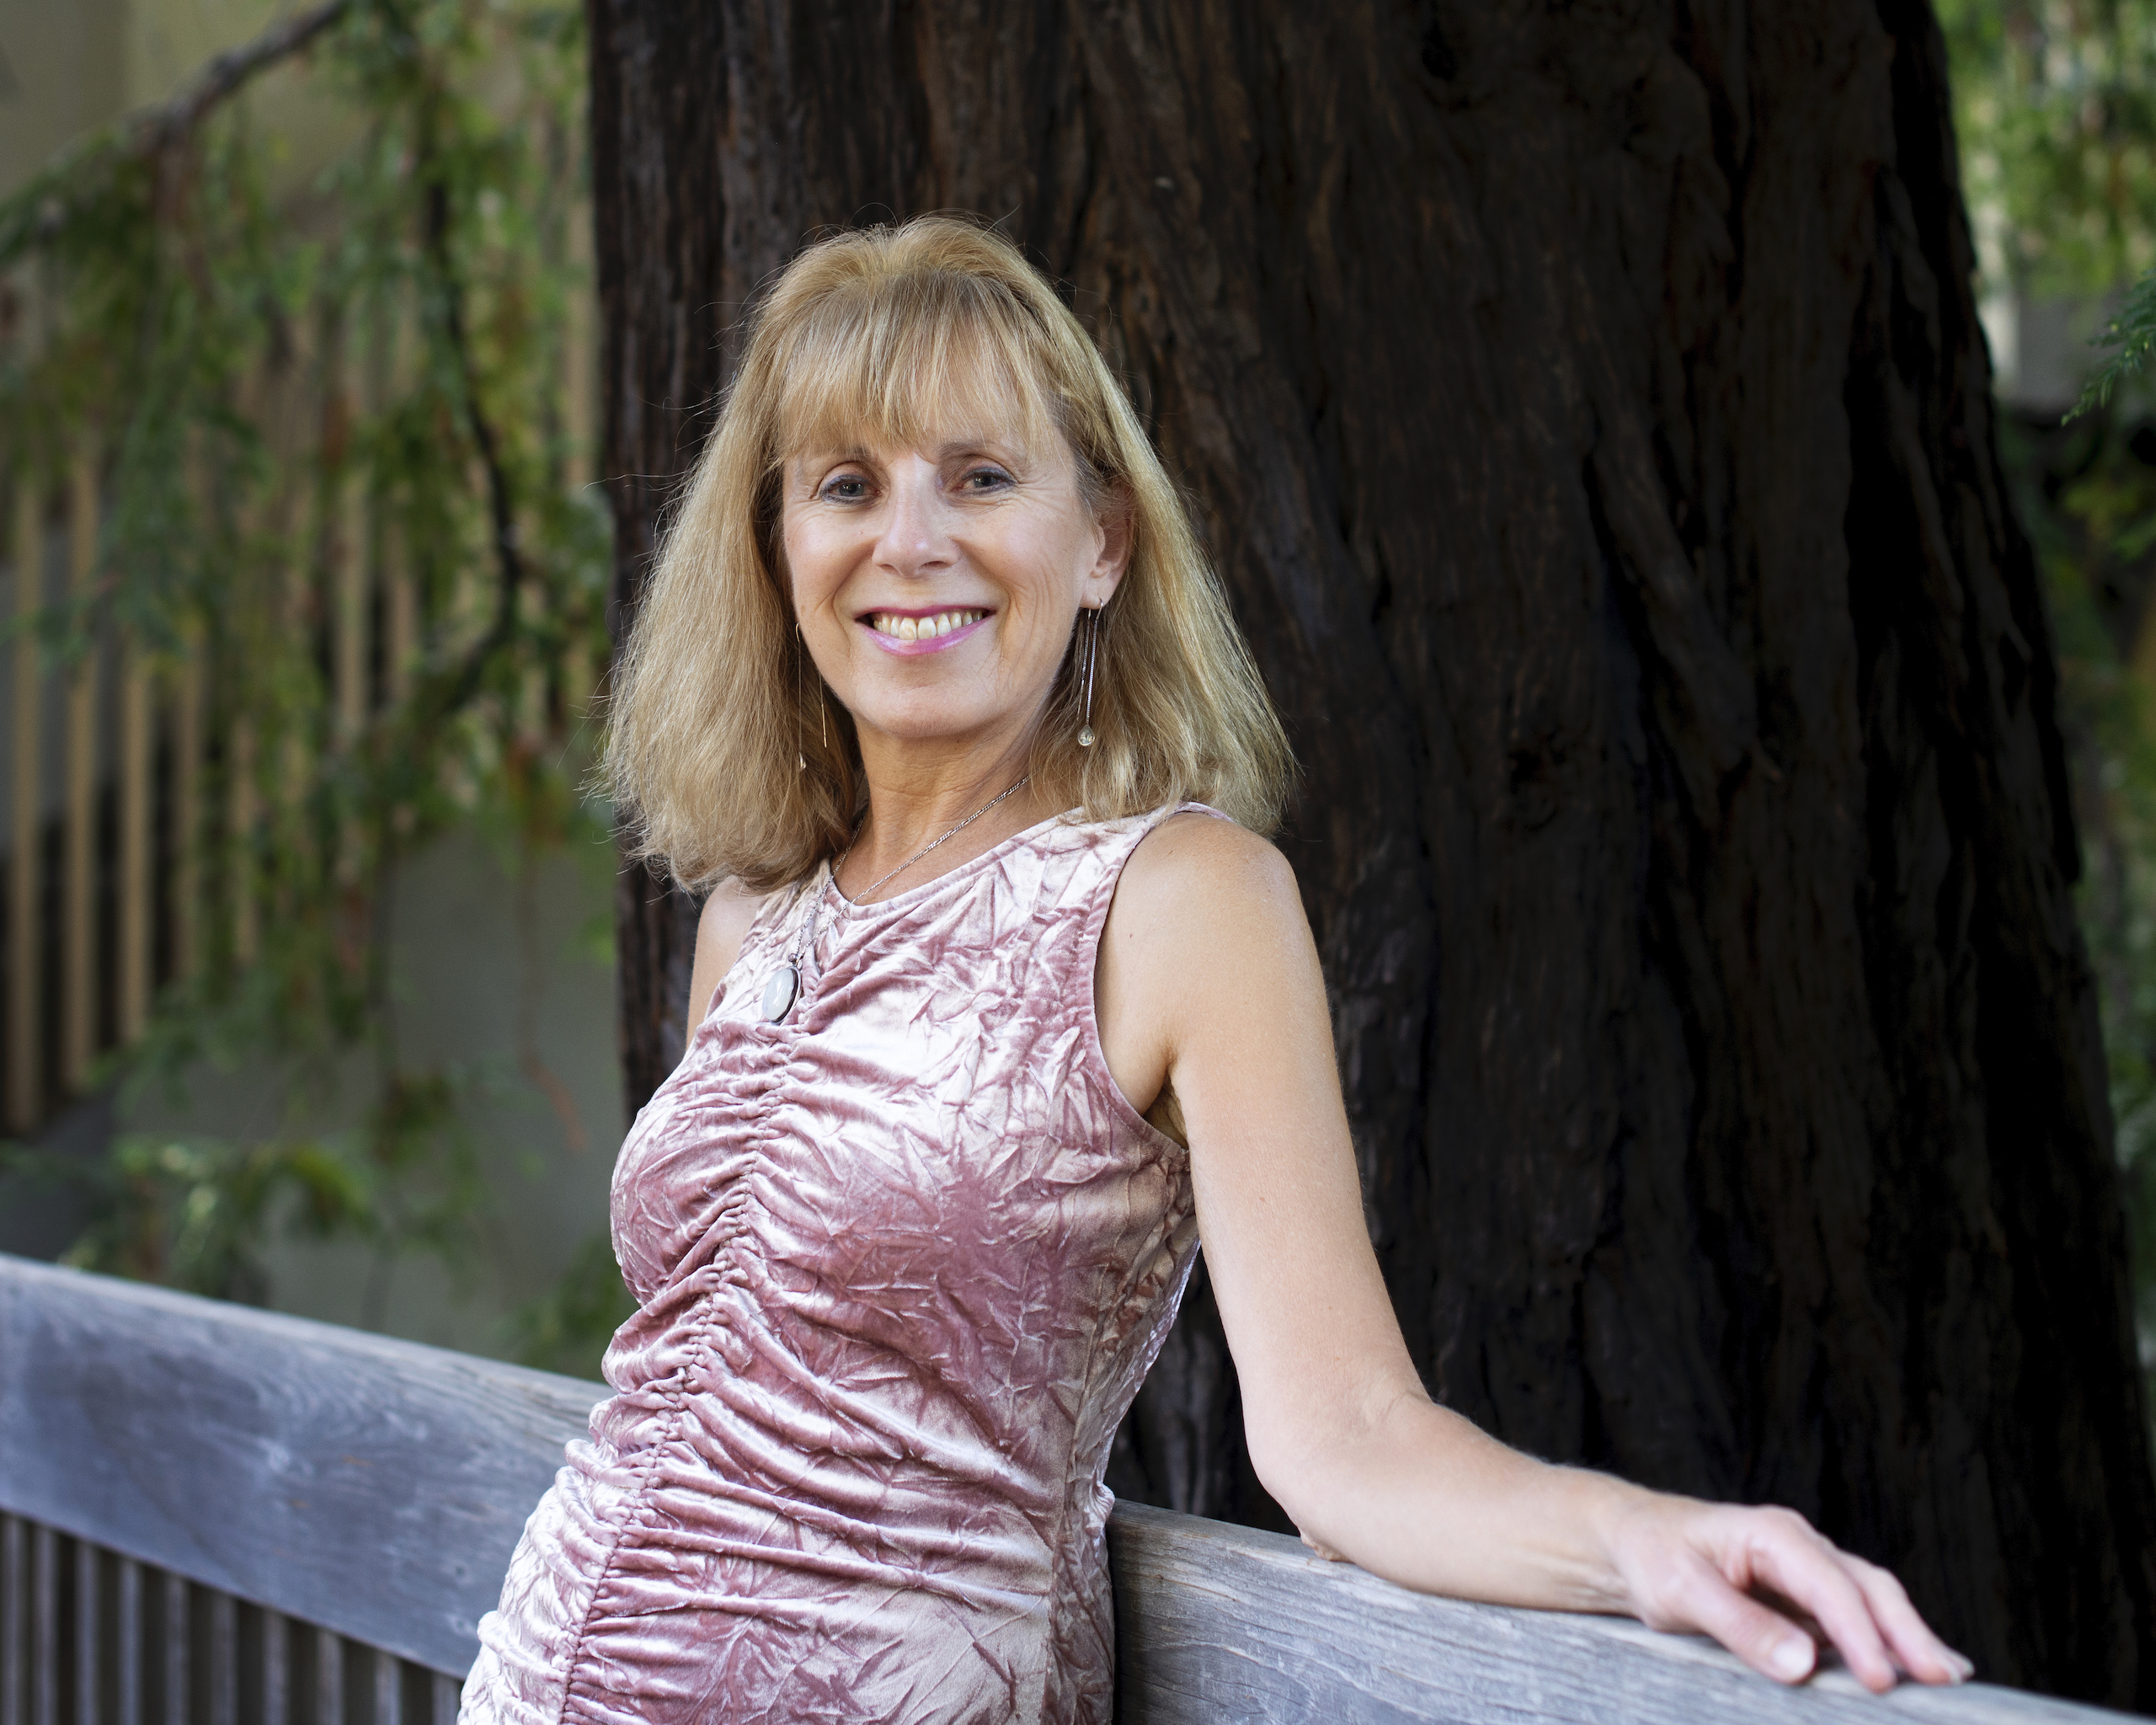 Nicola Walker in pink velvet dress leaning against railing in front of redwood tree